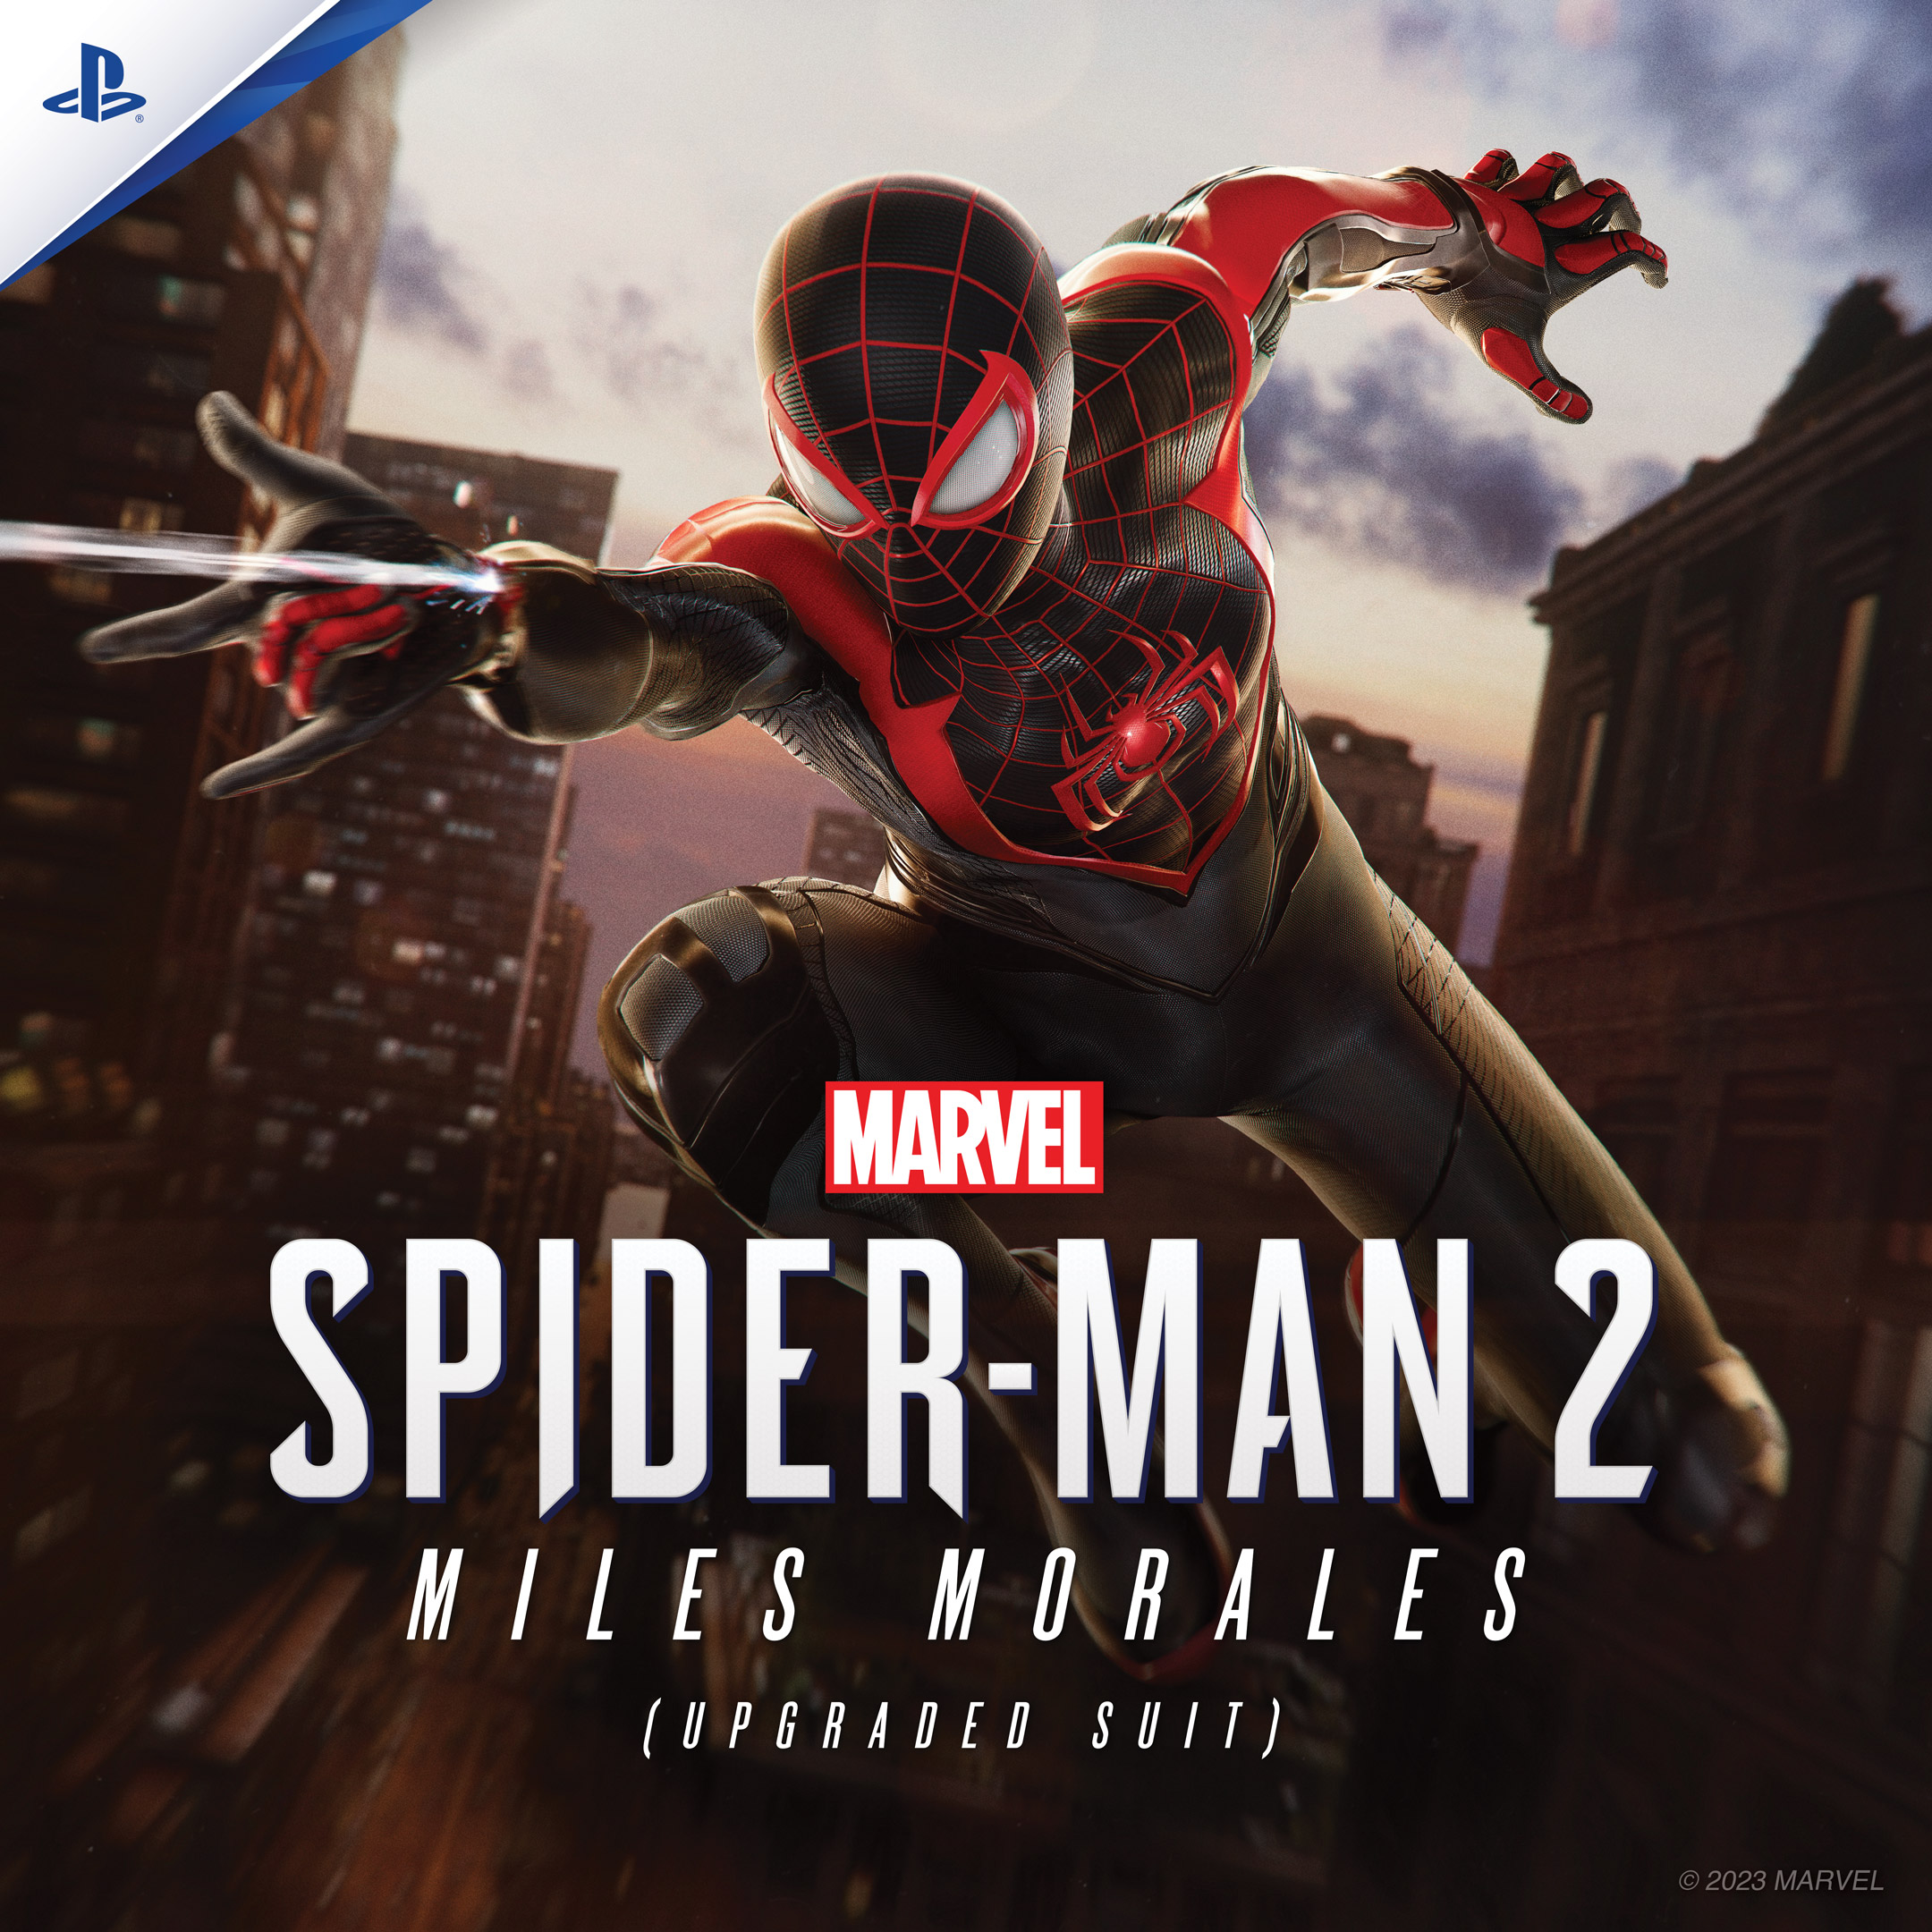 Insomniac Games on X: Pre-order Marvel's Spider-Man 2 starting